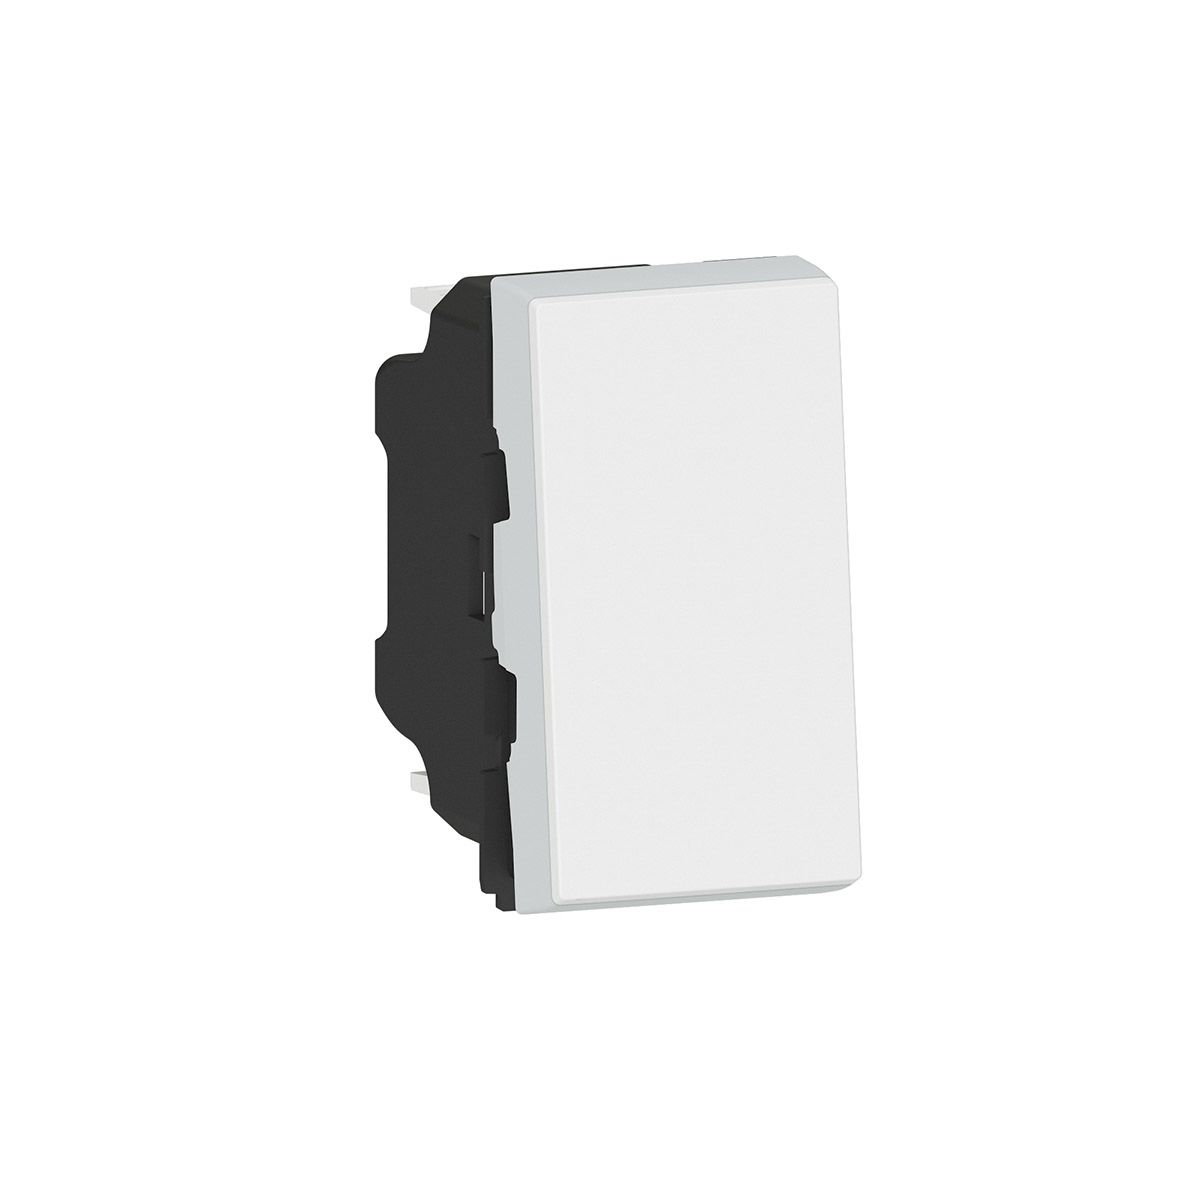 Legrand White Push Button Light Switch